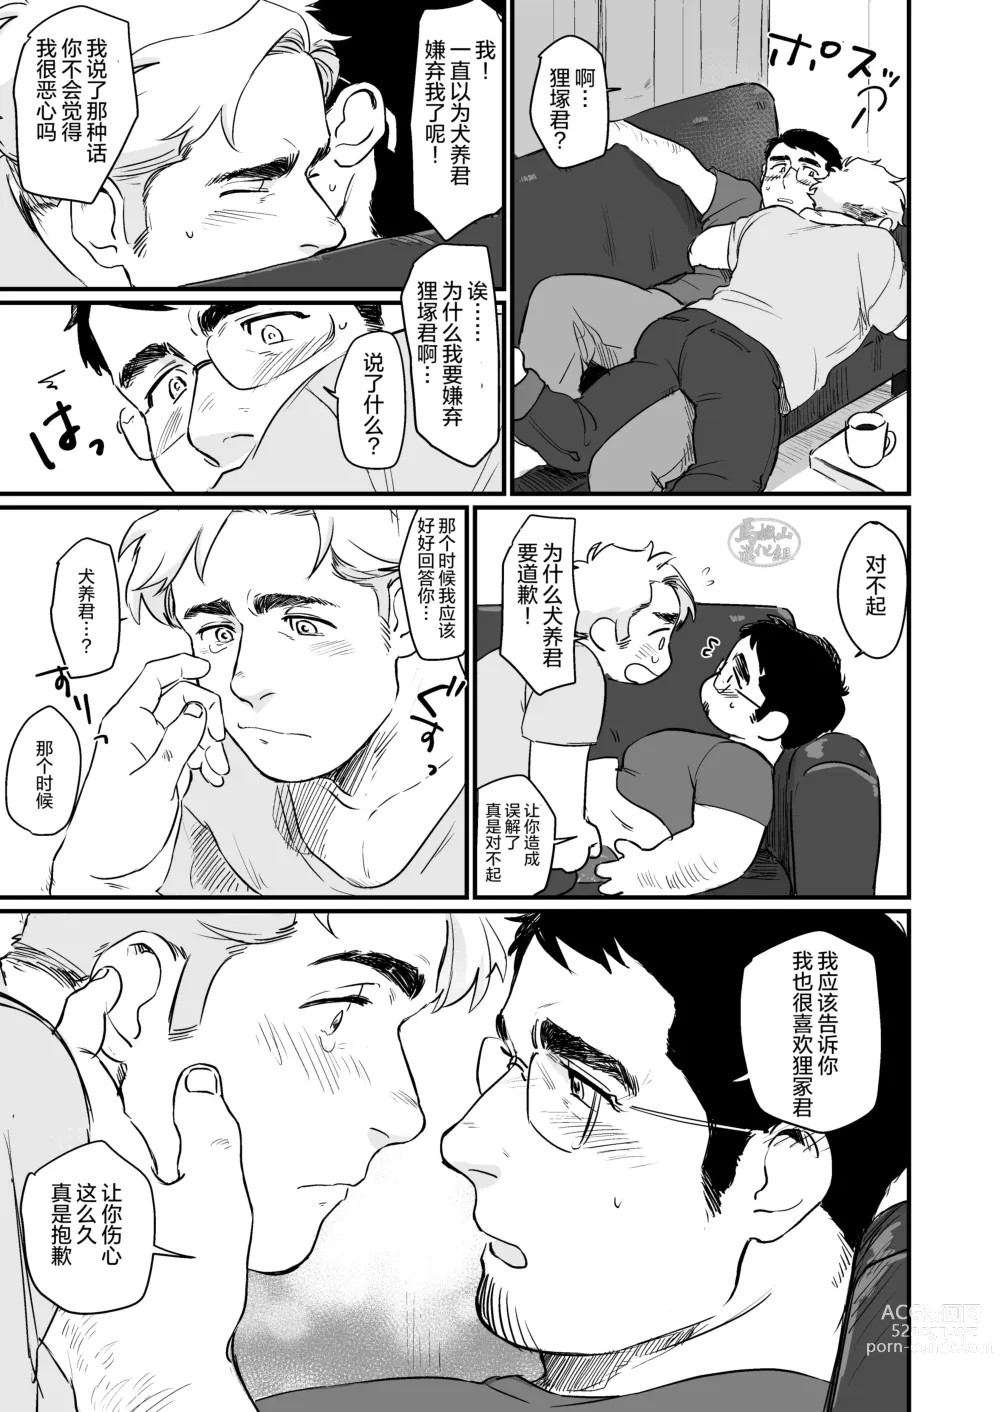 Page 13 of manga ビースティコンプレックス.动物狂想曲